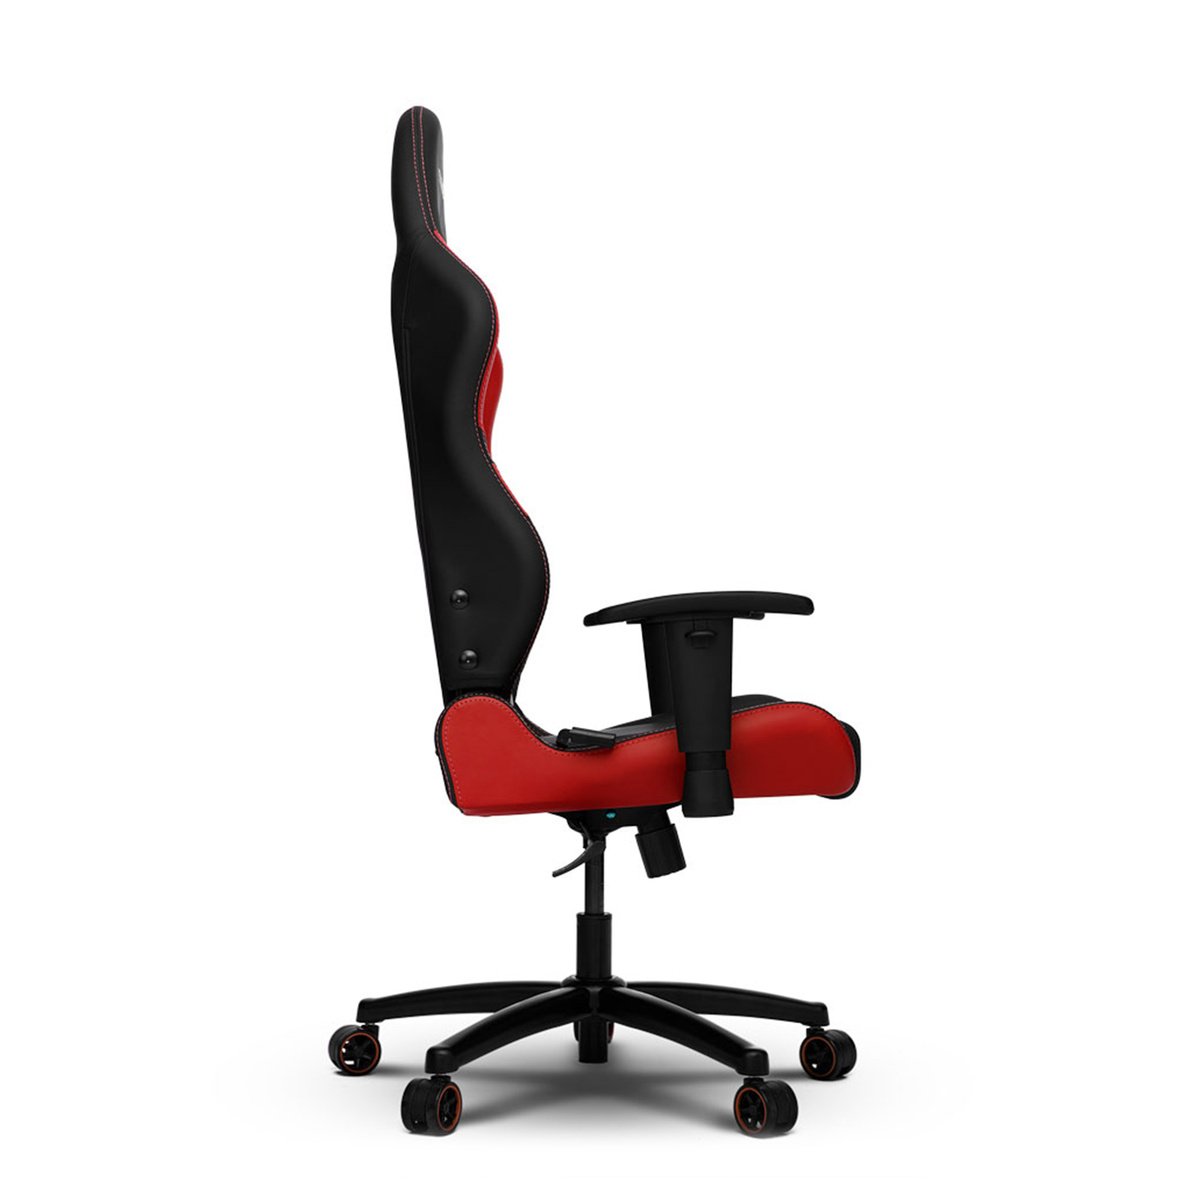 Vertagear Gaming Chair VG-SL1000_RD